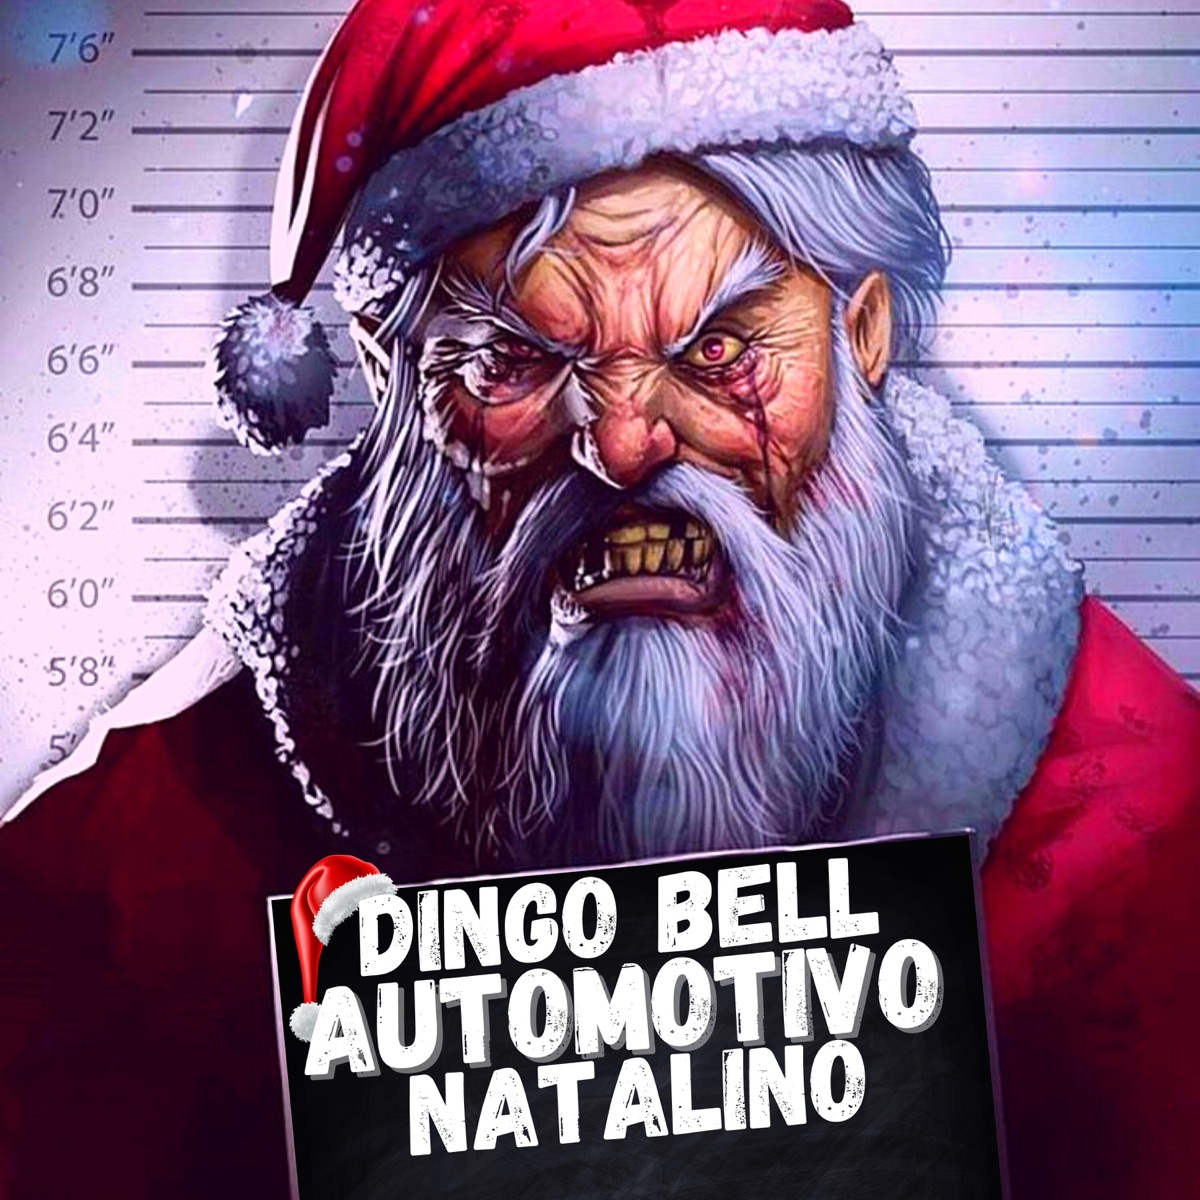 Dingo Bell Automotivo Natalino - Single - Album by dj dudah, Mc 4R & MC GW  - Apple Music